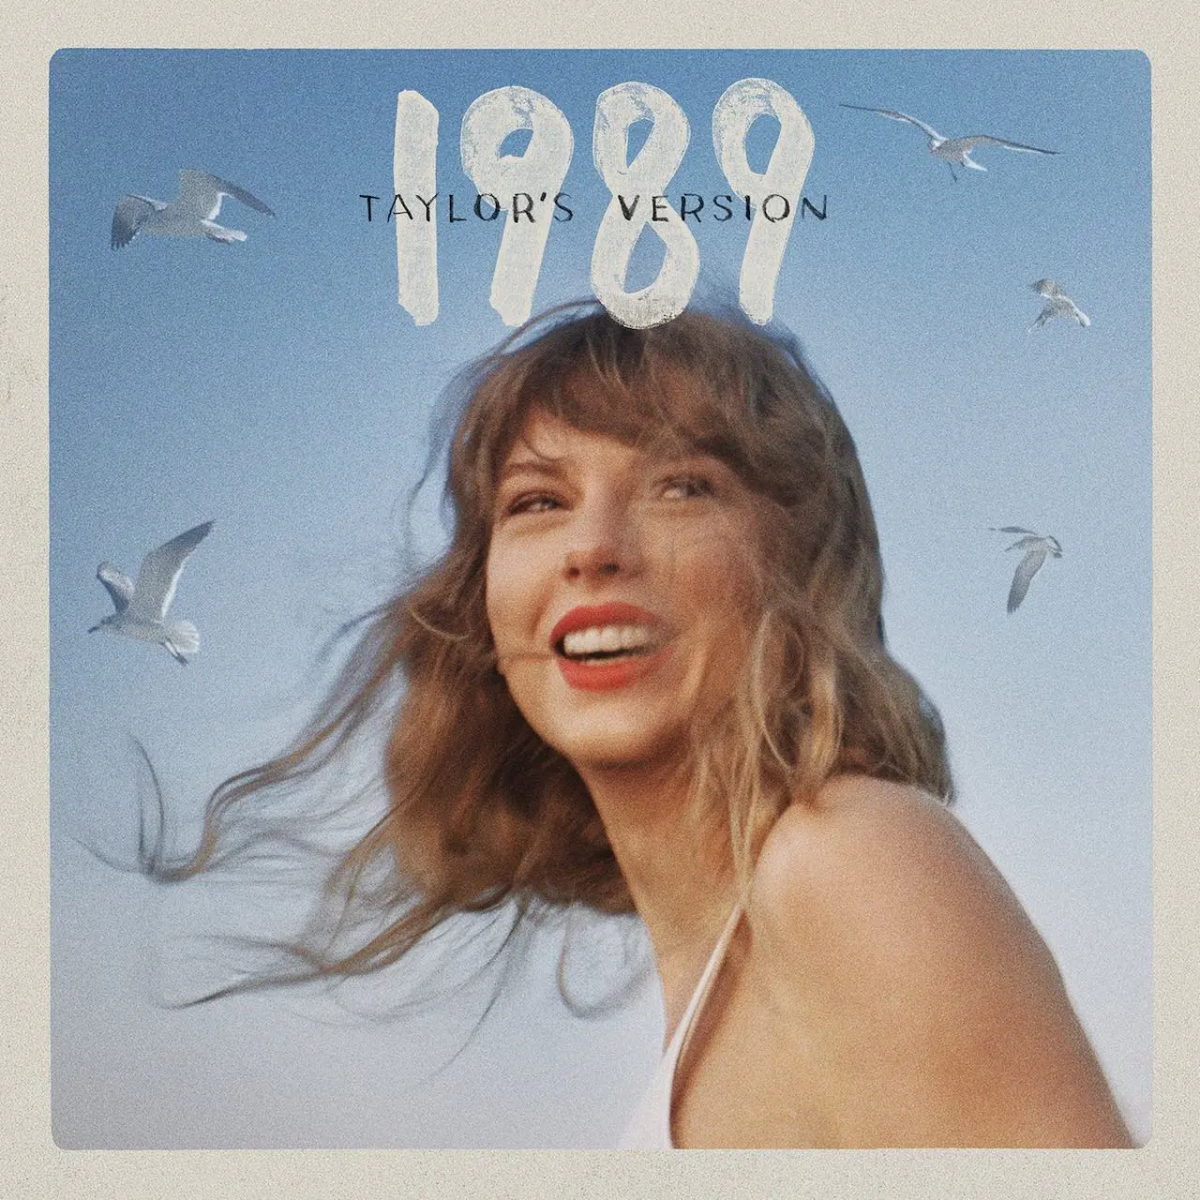 1989 (Taylors Version) album cover (Courtesy of Republic)